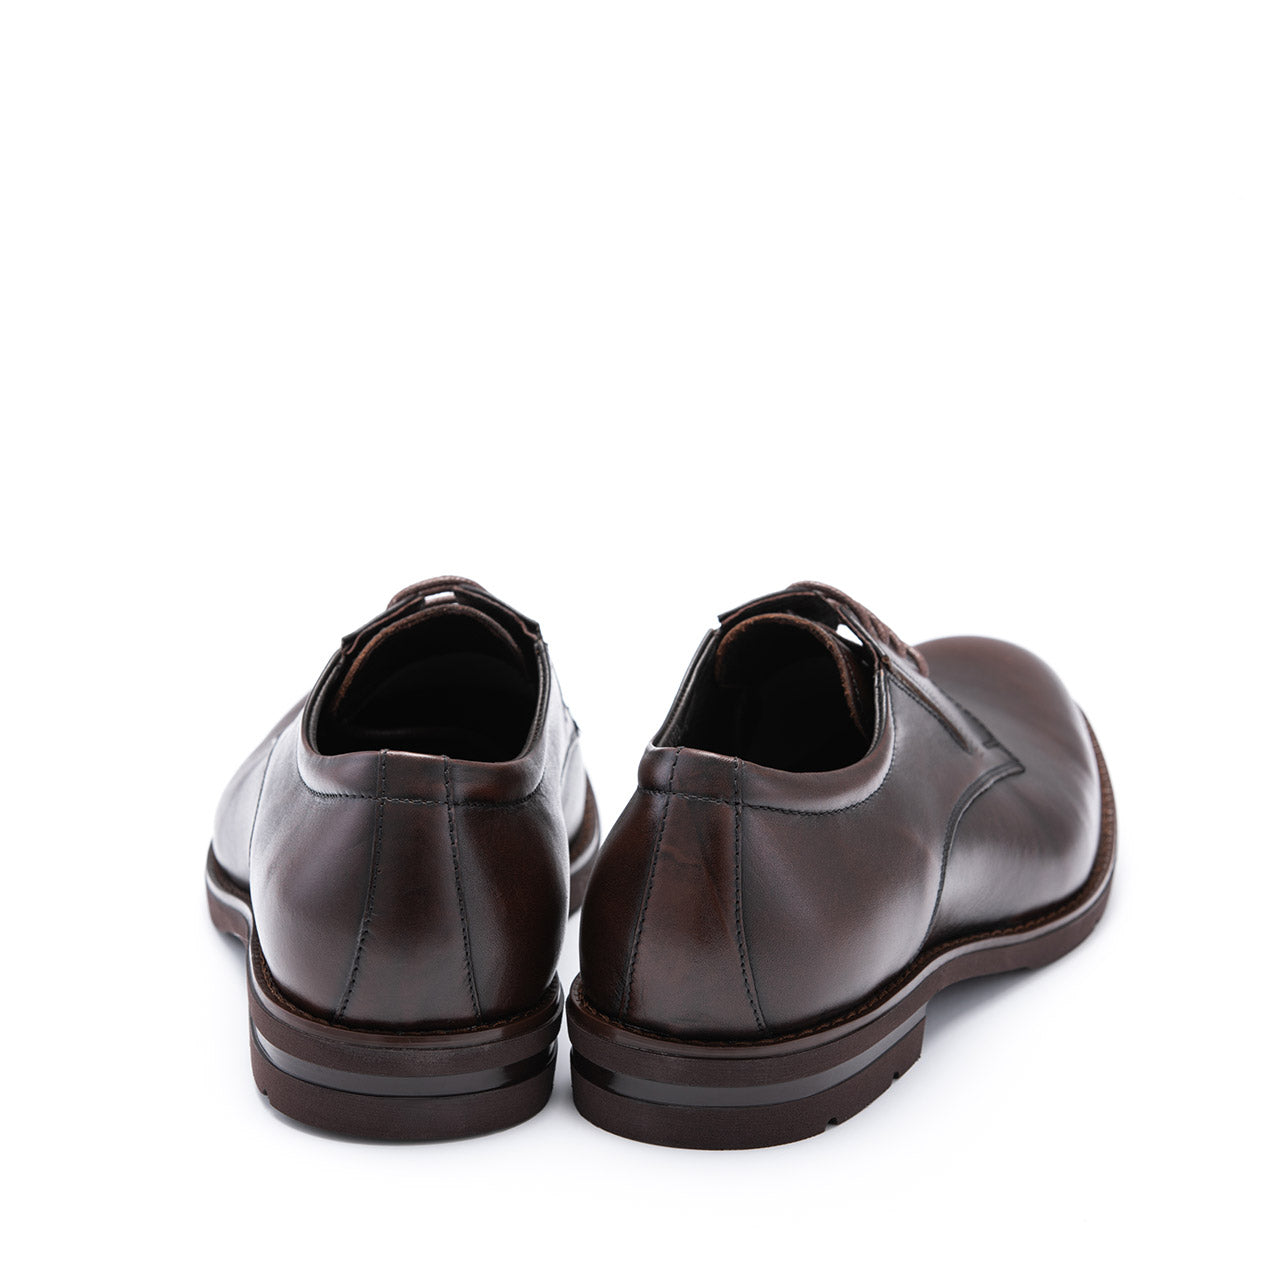 Pantofi eleganti barbati Aspen maro inchis